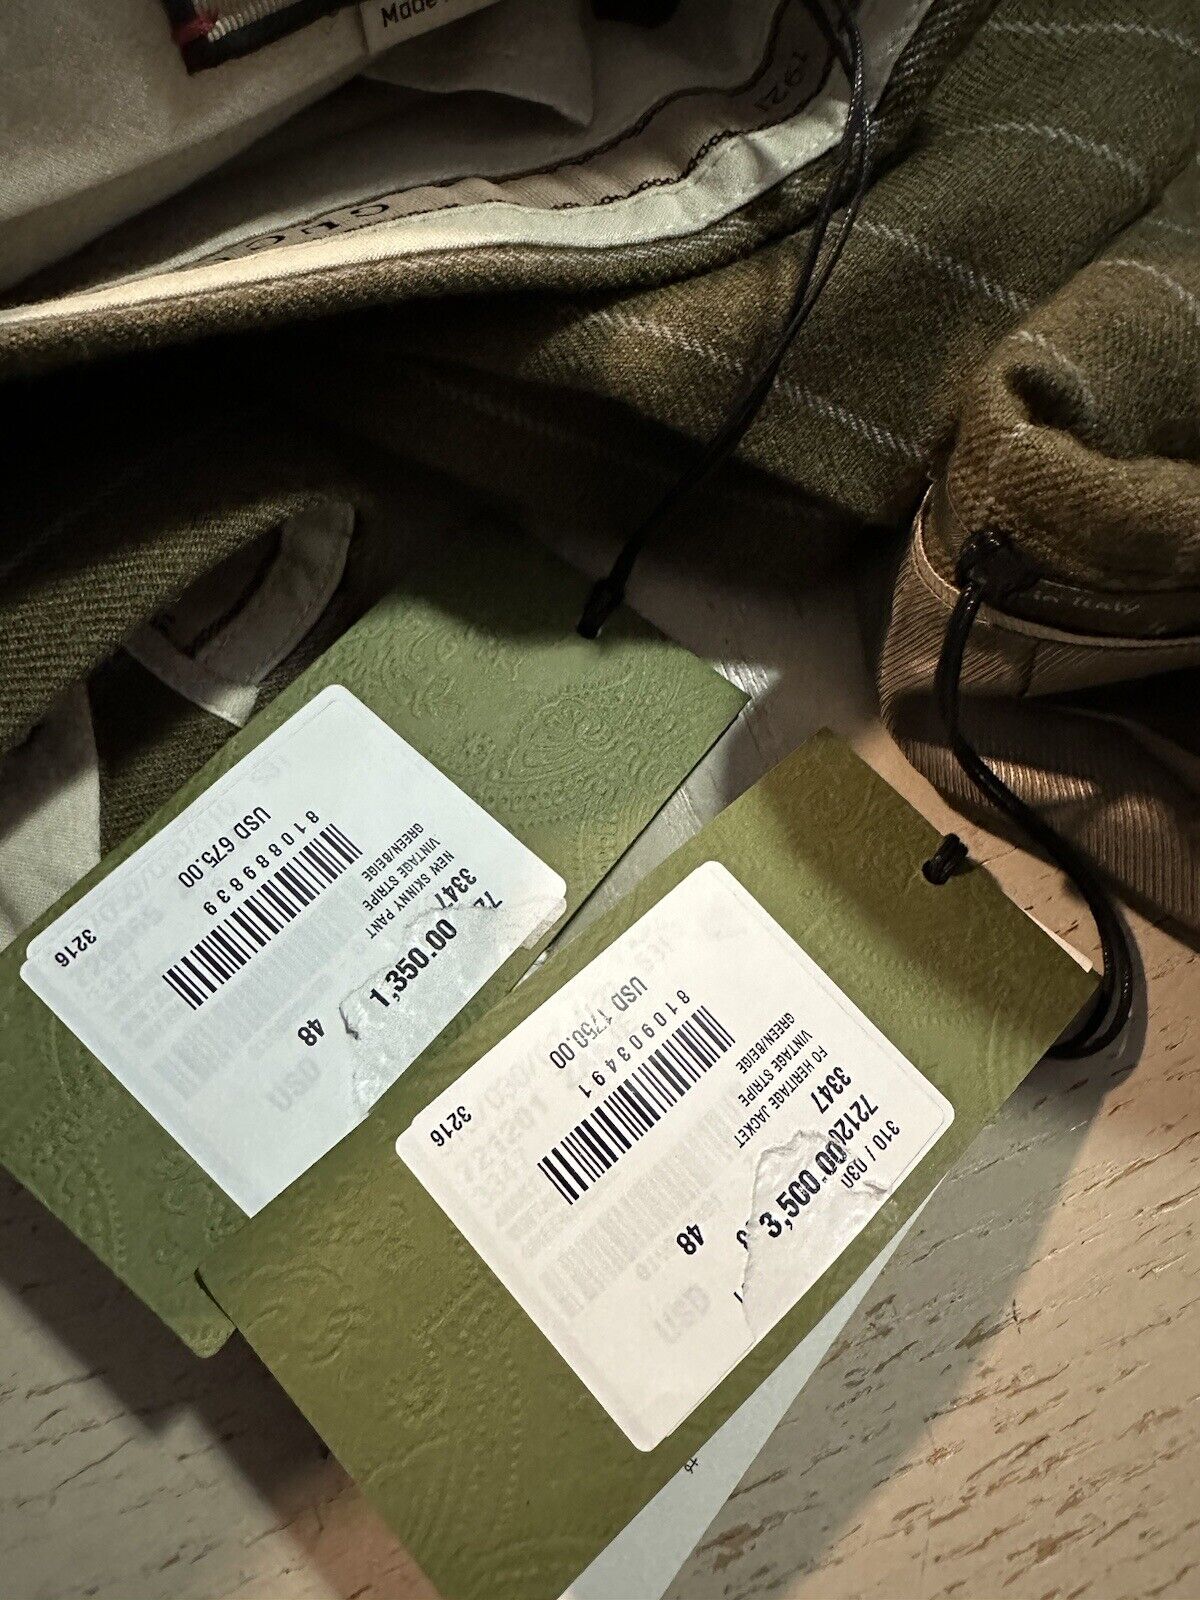 NWT $4850 Gucci Men’s Wool Striped Suit Green/Beige 38R US/48R Eu